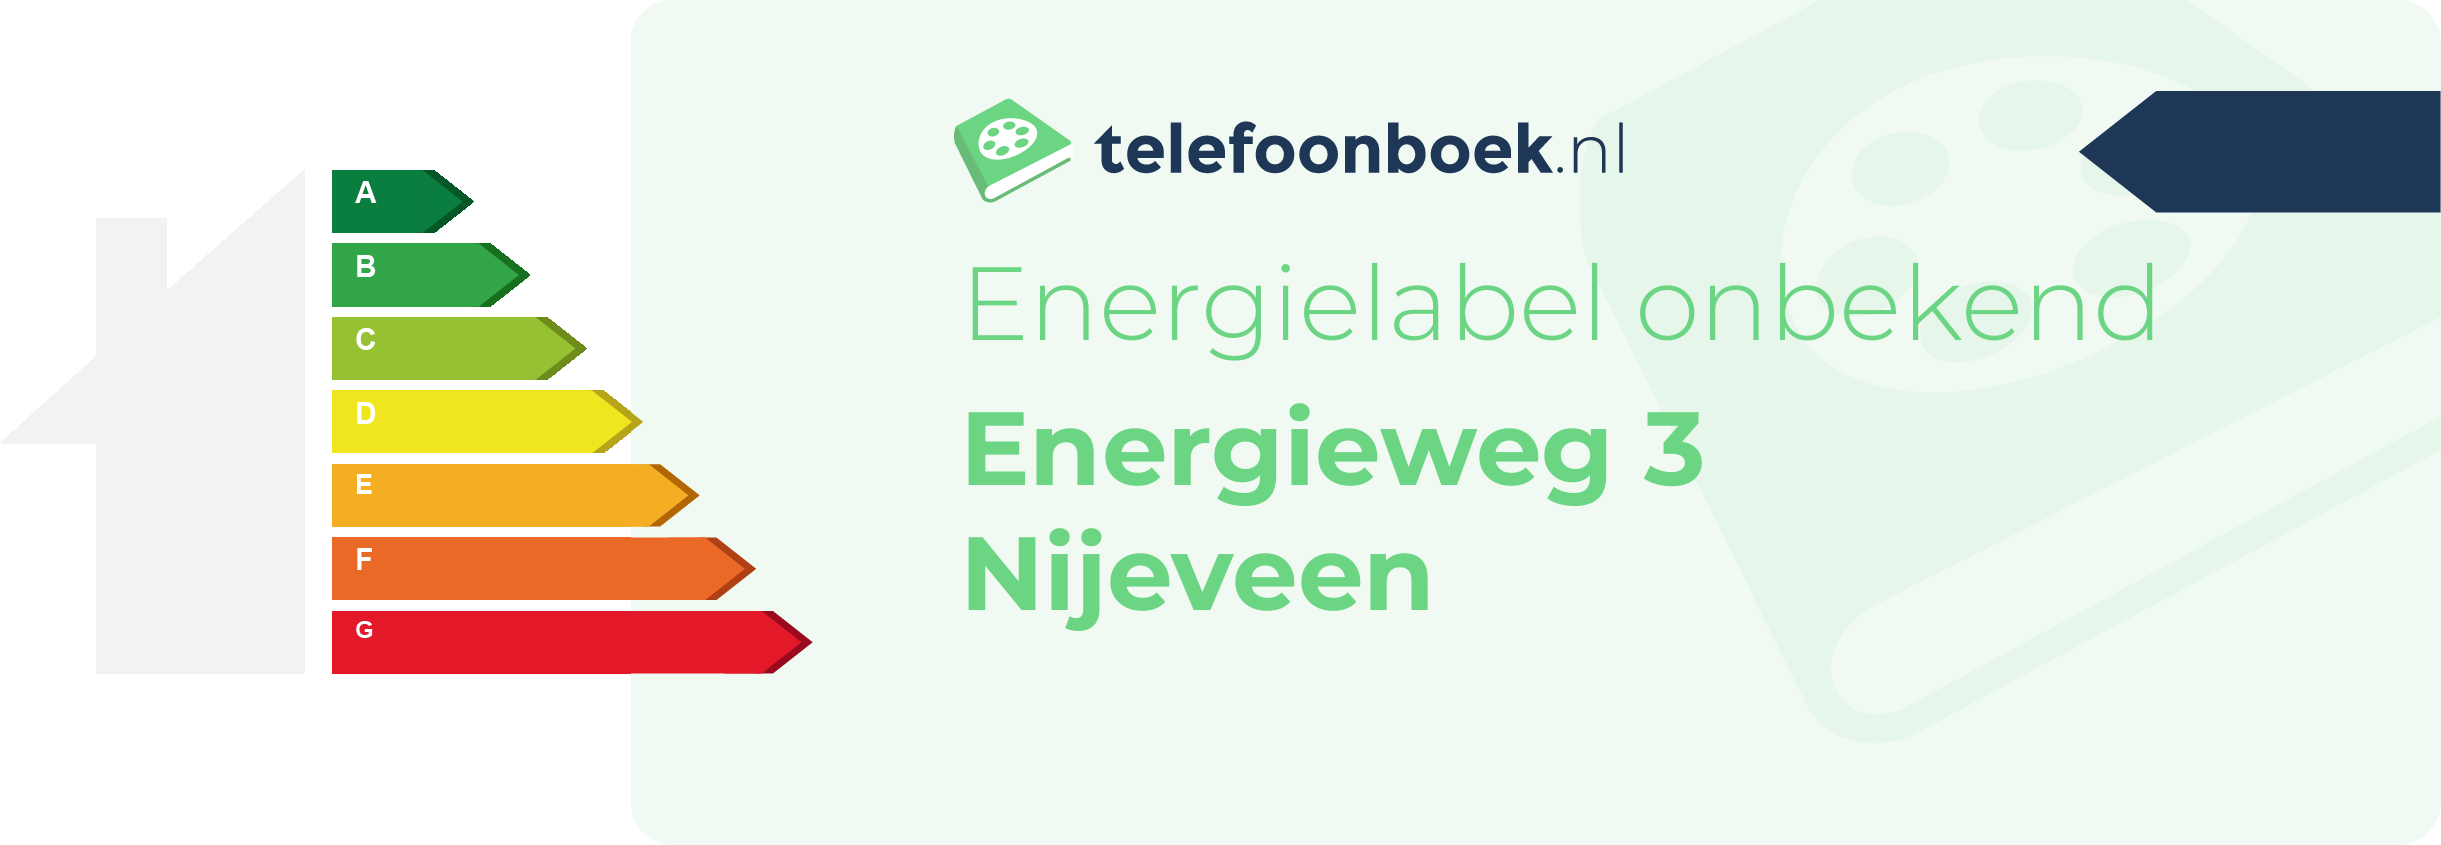 Energielabel Energieweg 3 Nijeveen